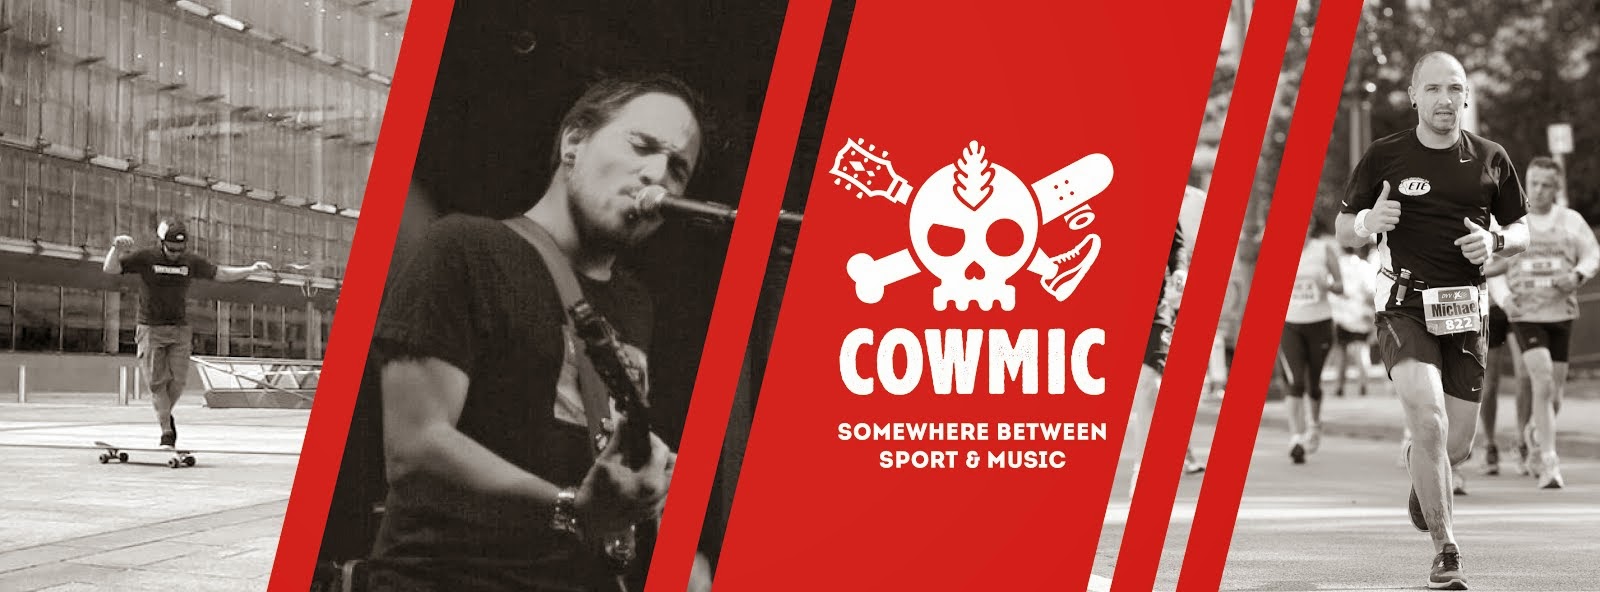 Cowmic - Between Sport & Music